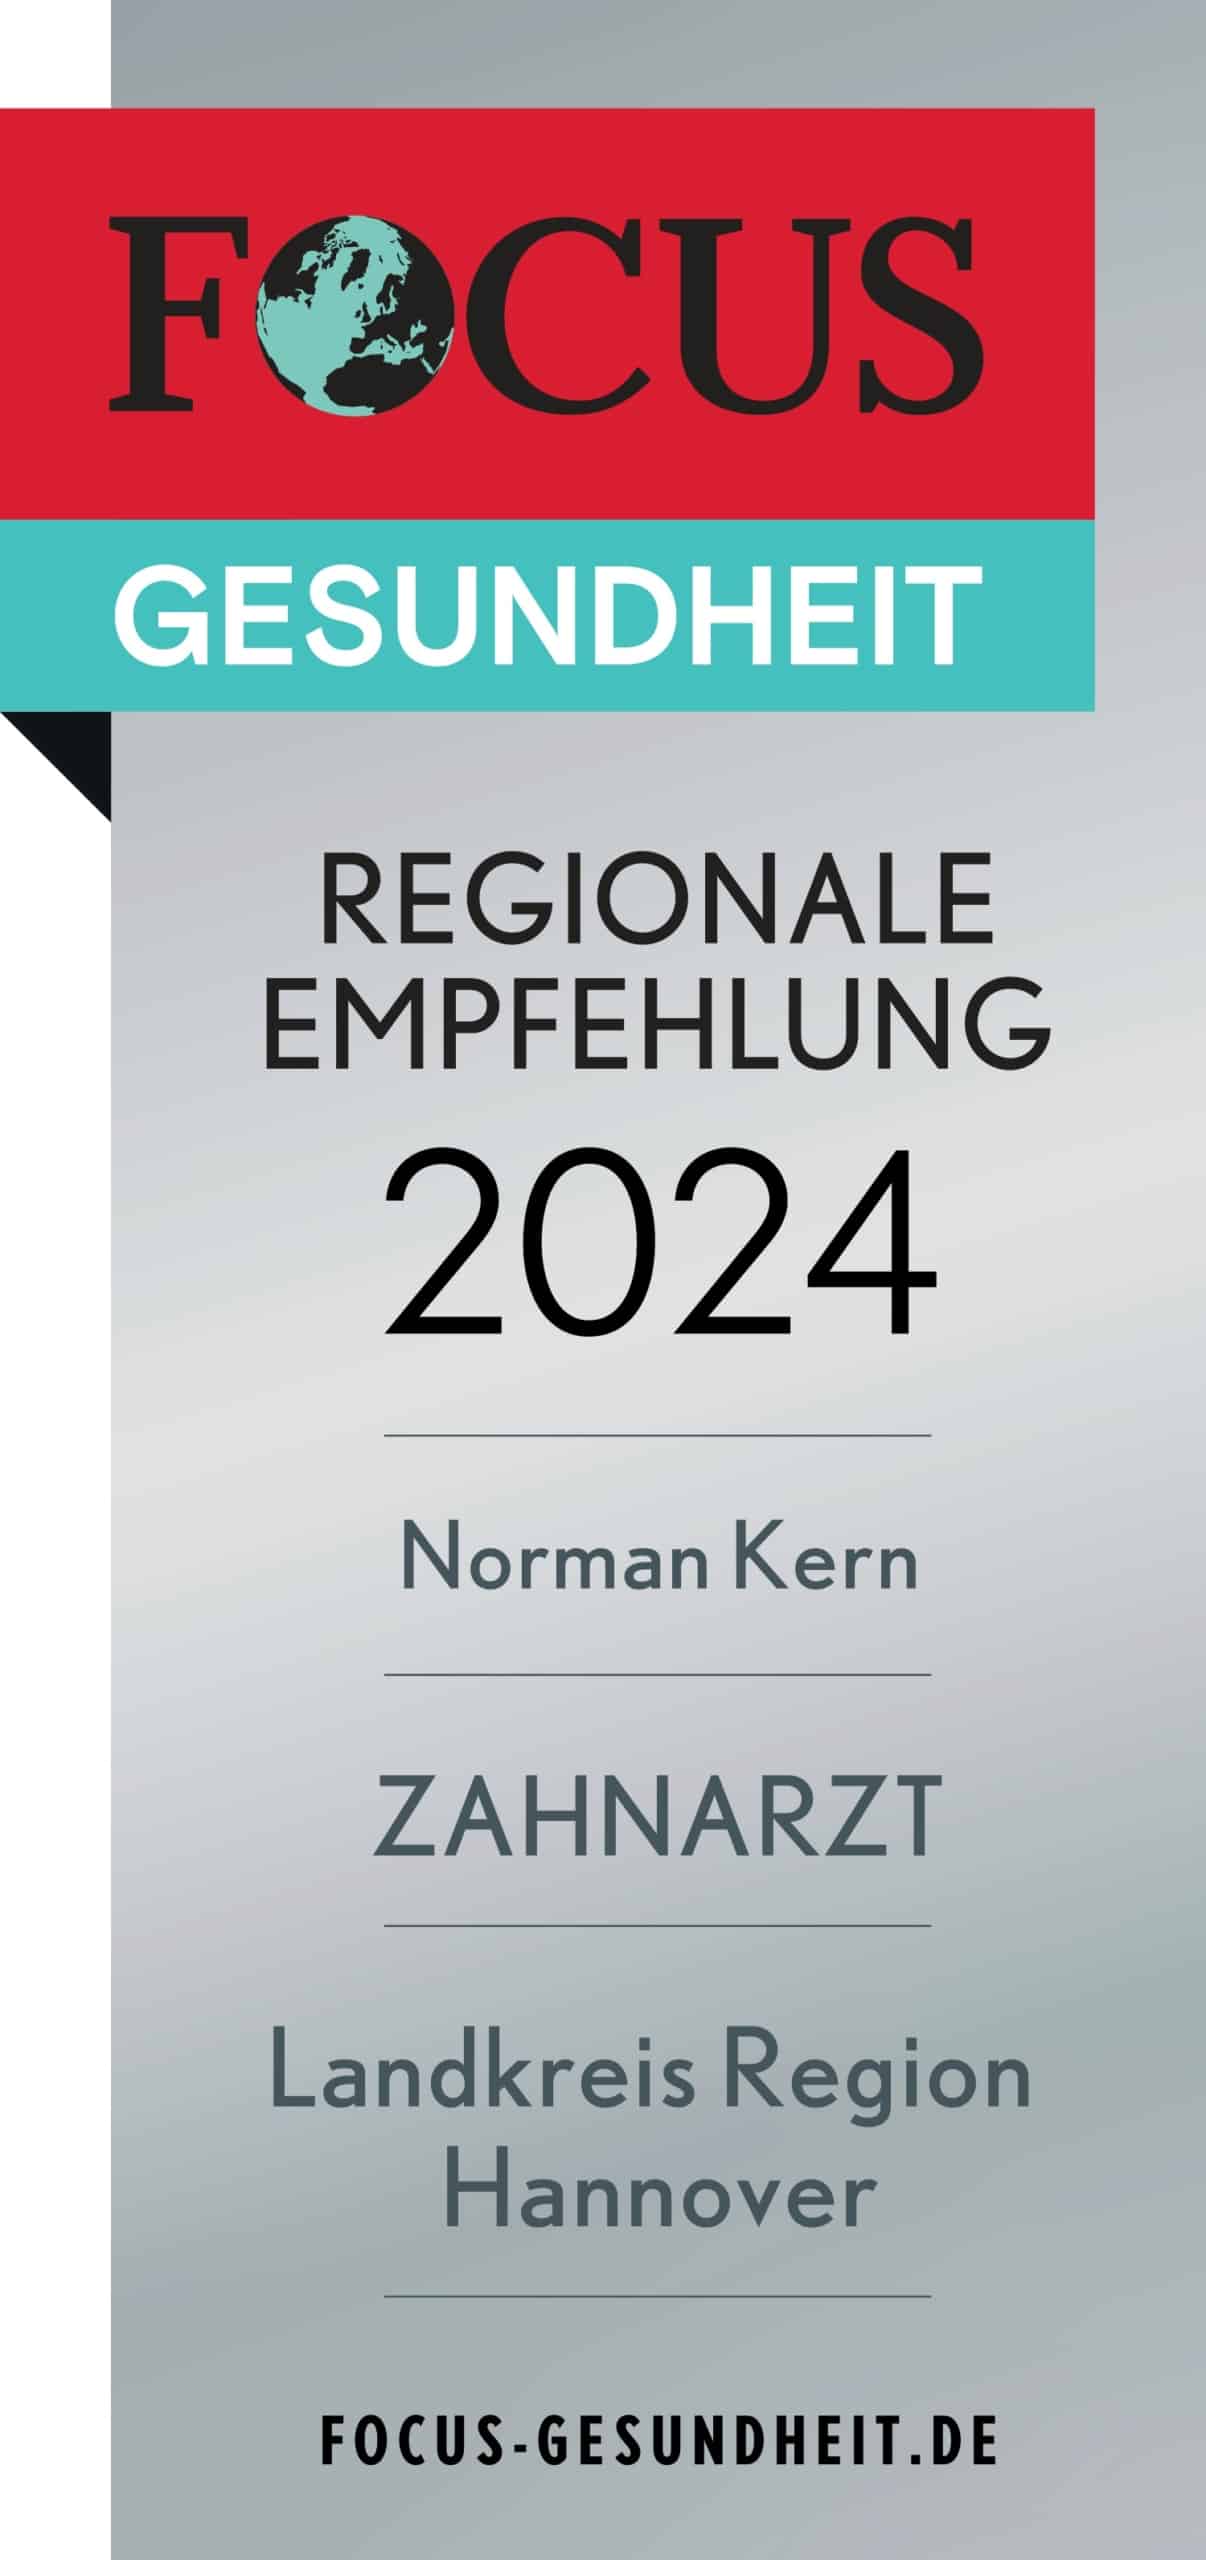 2024 norman kern zahnarzt landkreis region hannover focus gesundheitde large scaled